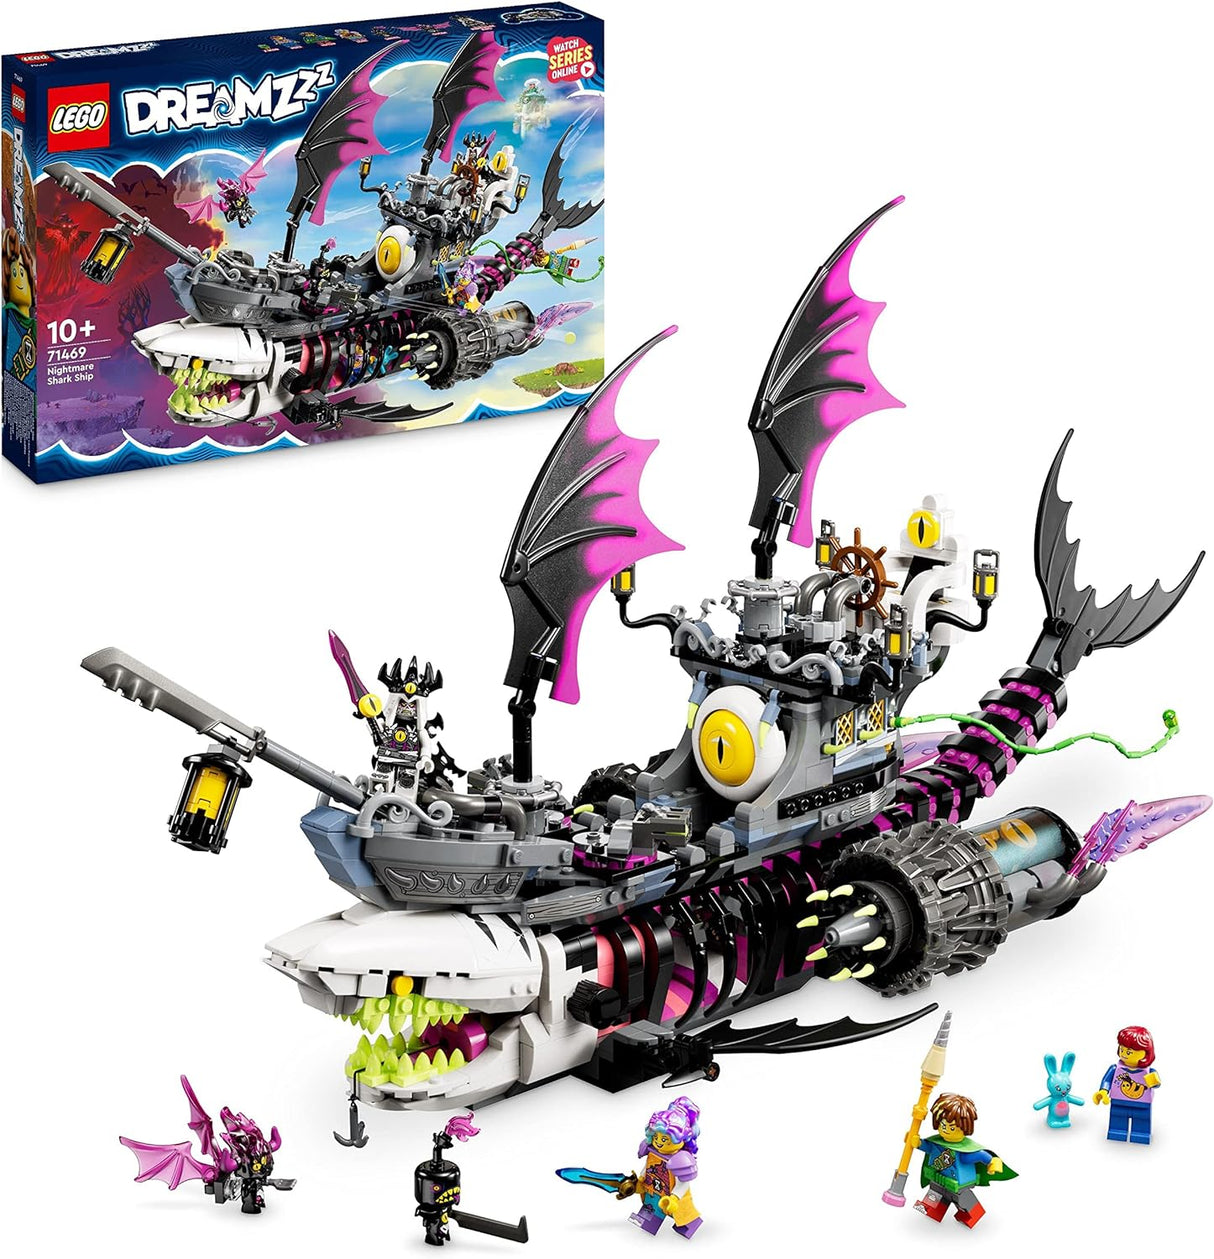 LEGO DREAMZzz 71469 - Sharkynau dos Pesadelos